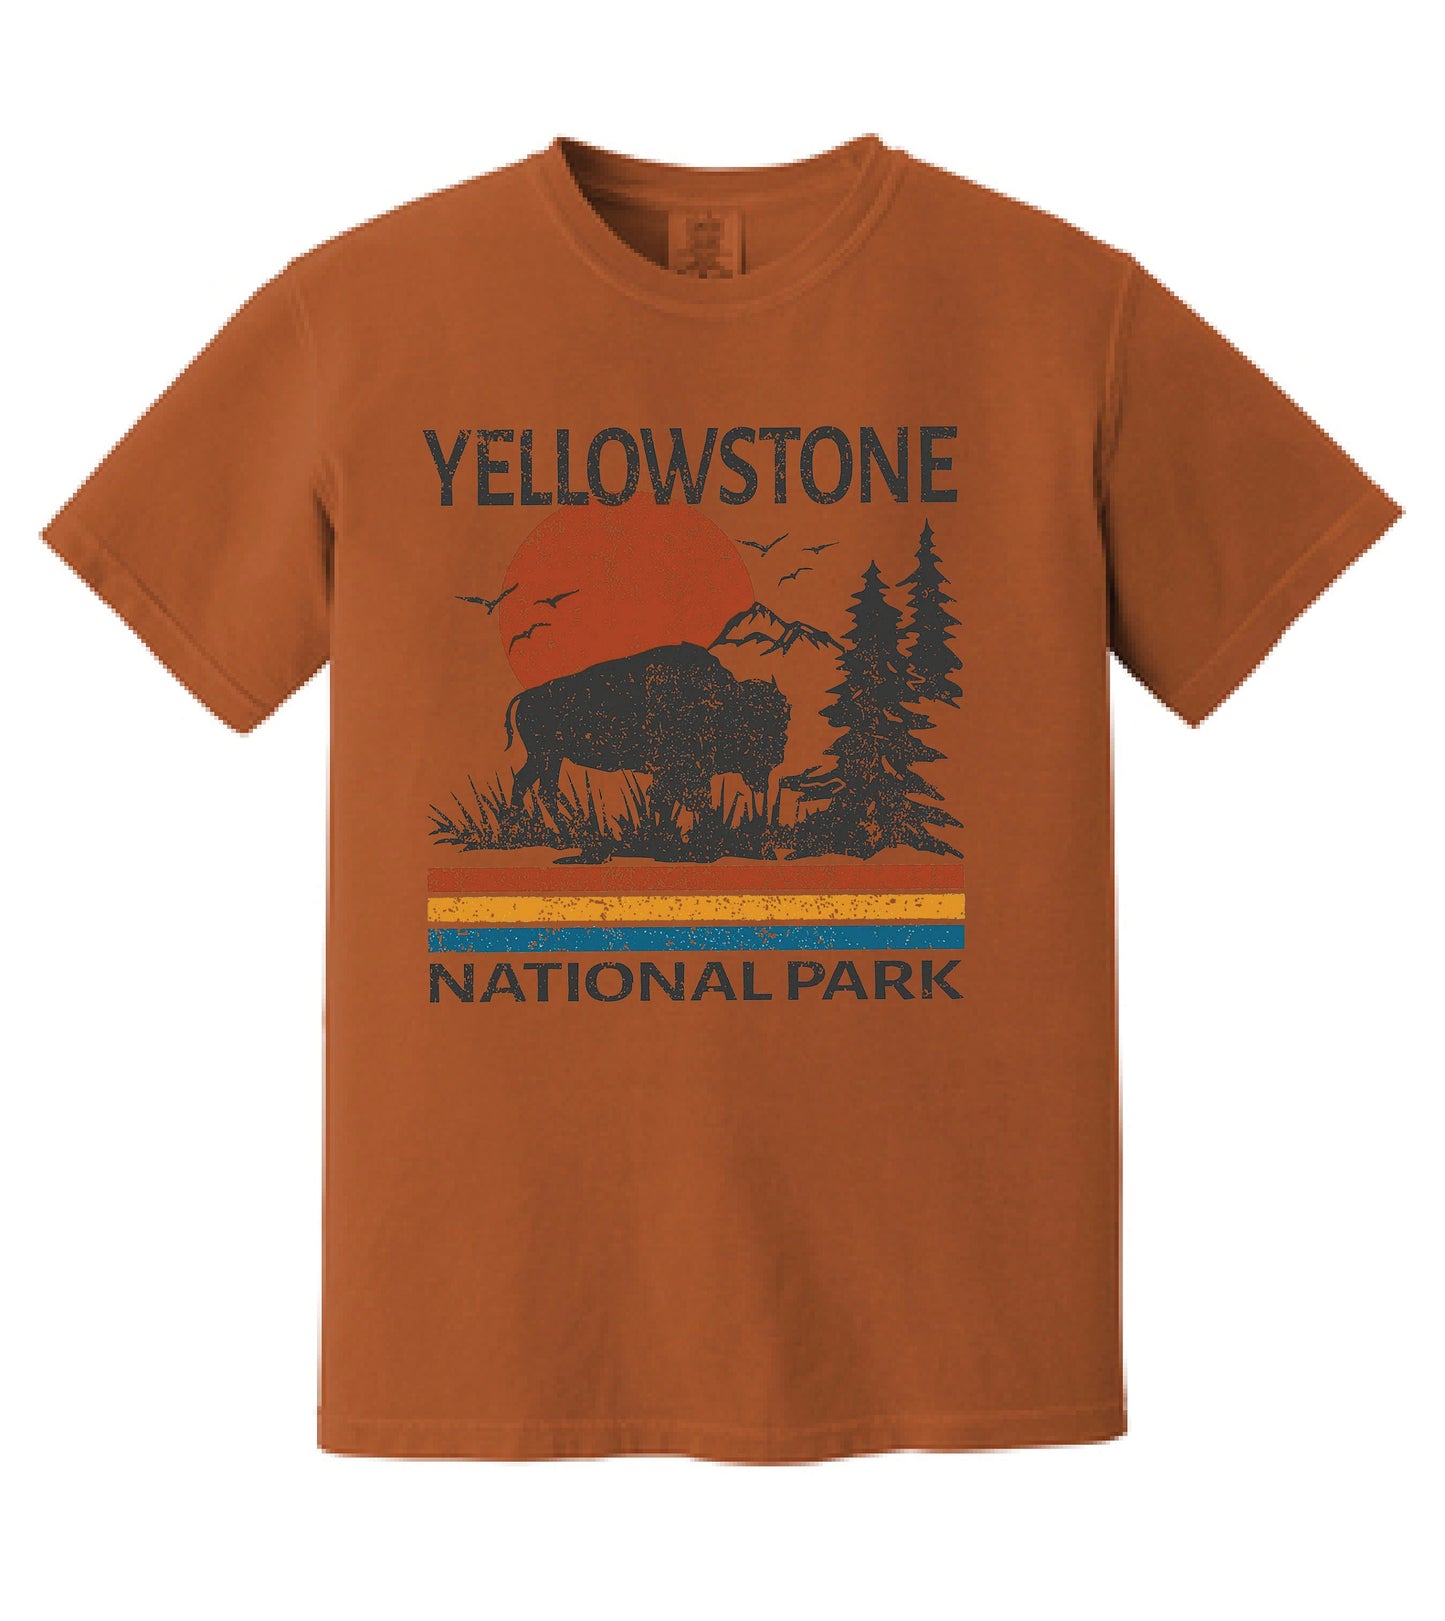 Yellowstone Tee, Yellowstone National Park T-Shirt, The Yellowstone Vintage Inspired tee, Unisex Tee, Comfort Colors T-shirt, Oversized Tee